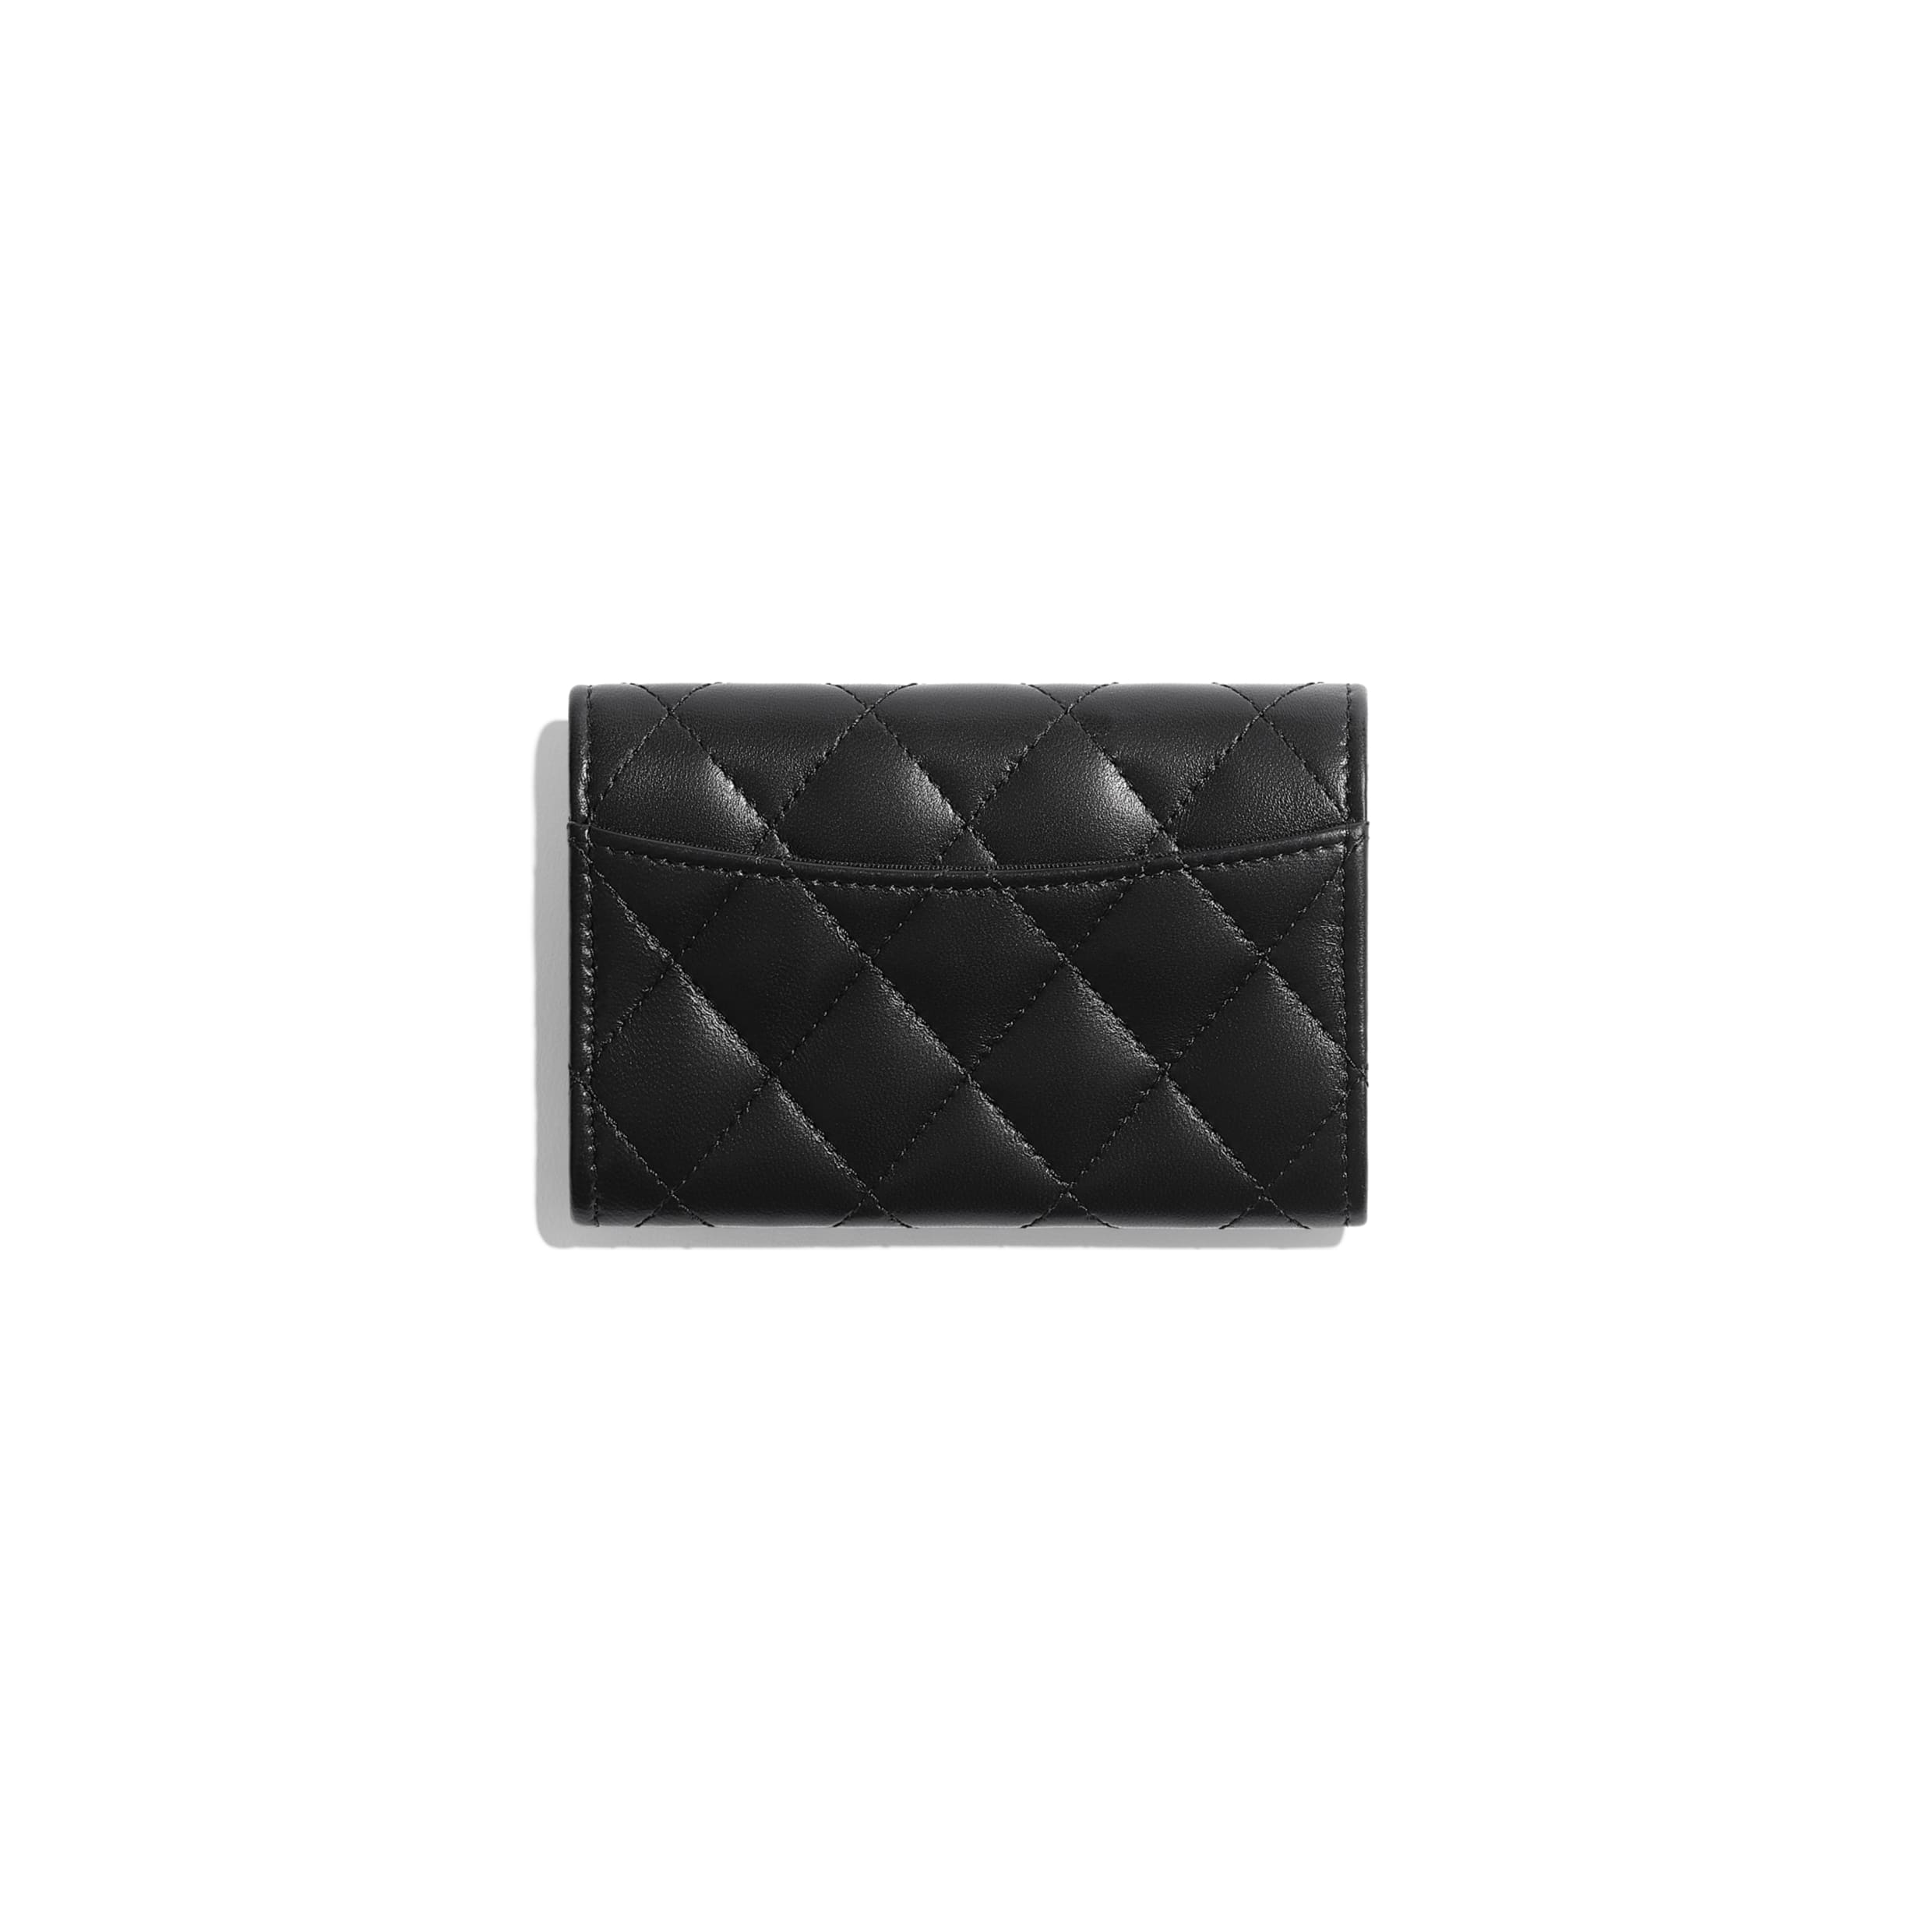 Chanel Classic Card Holder Black